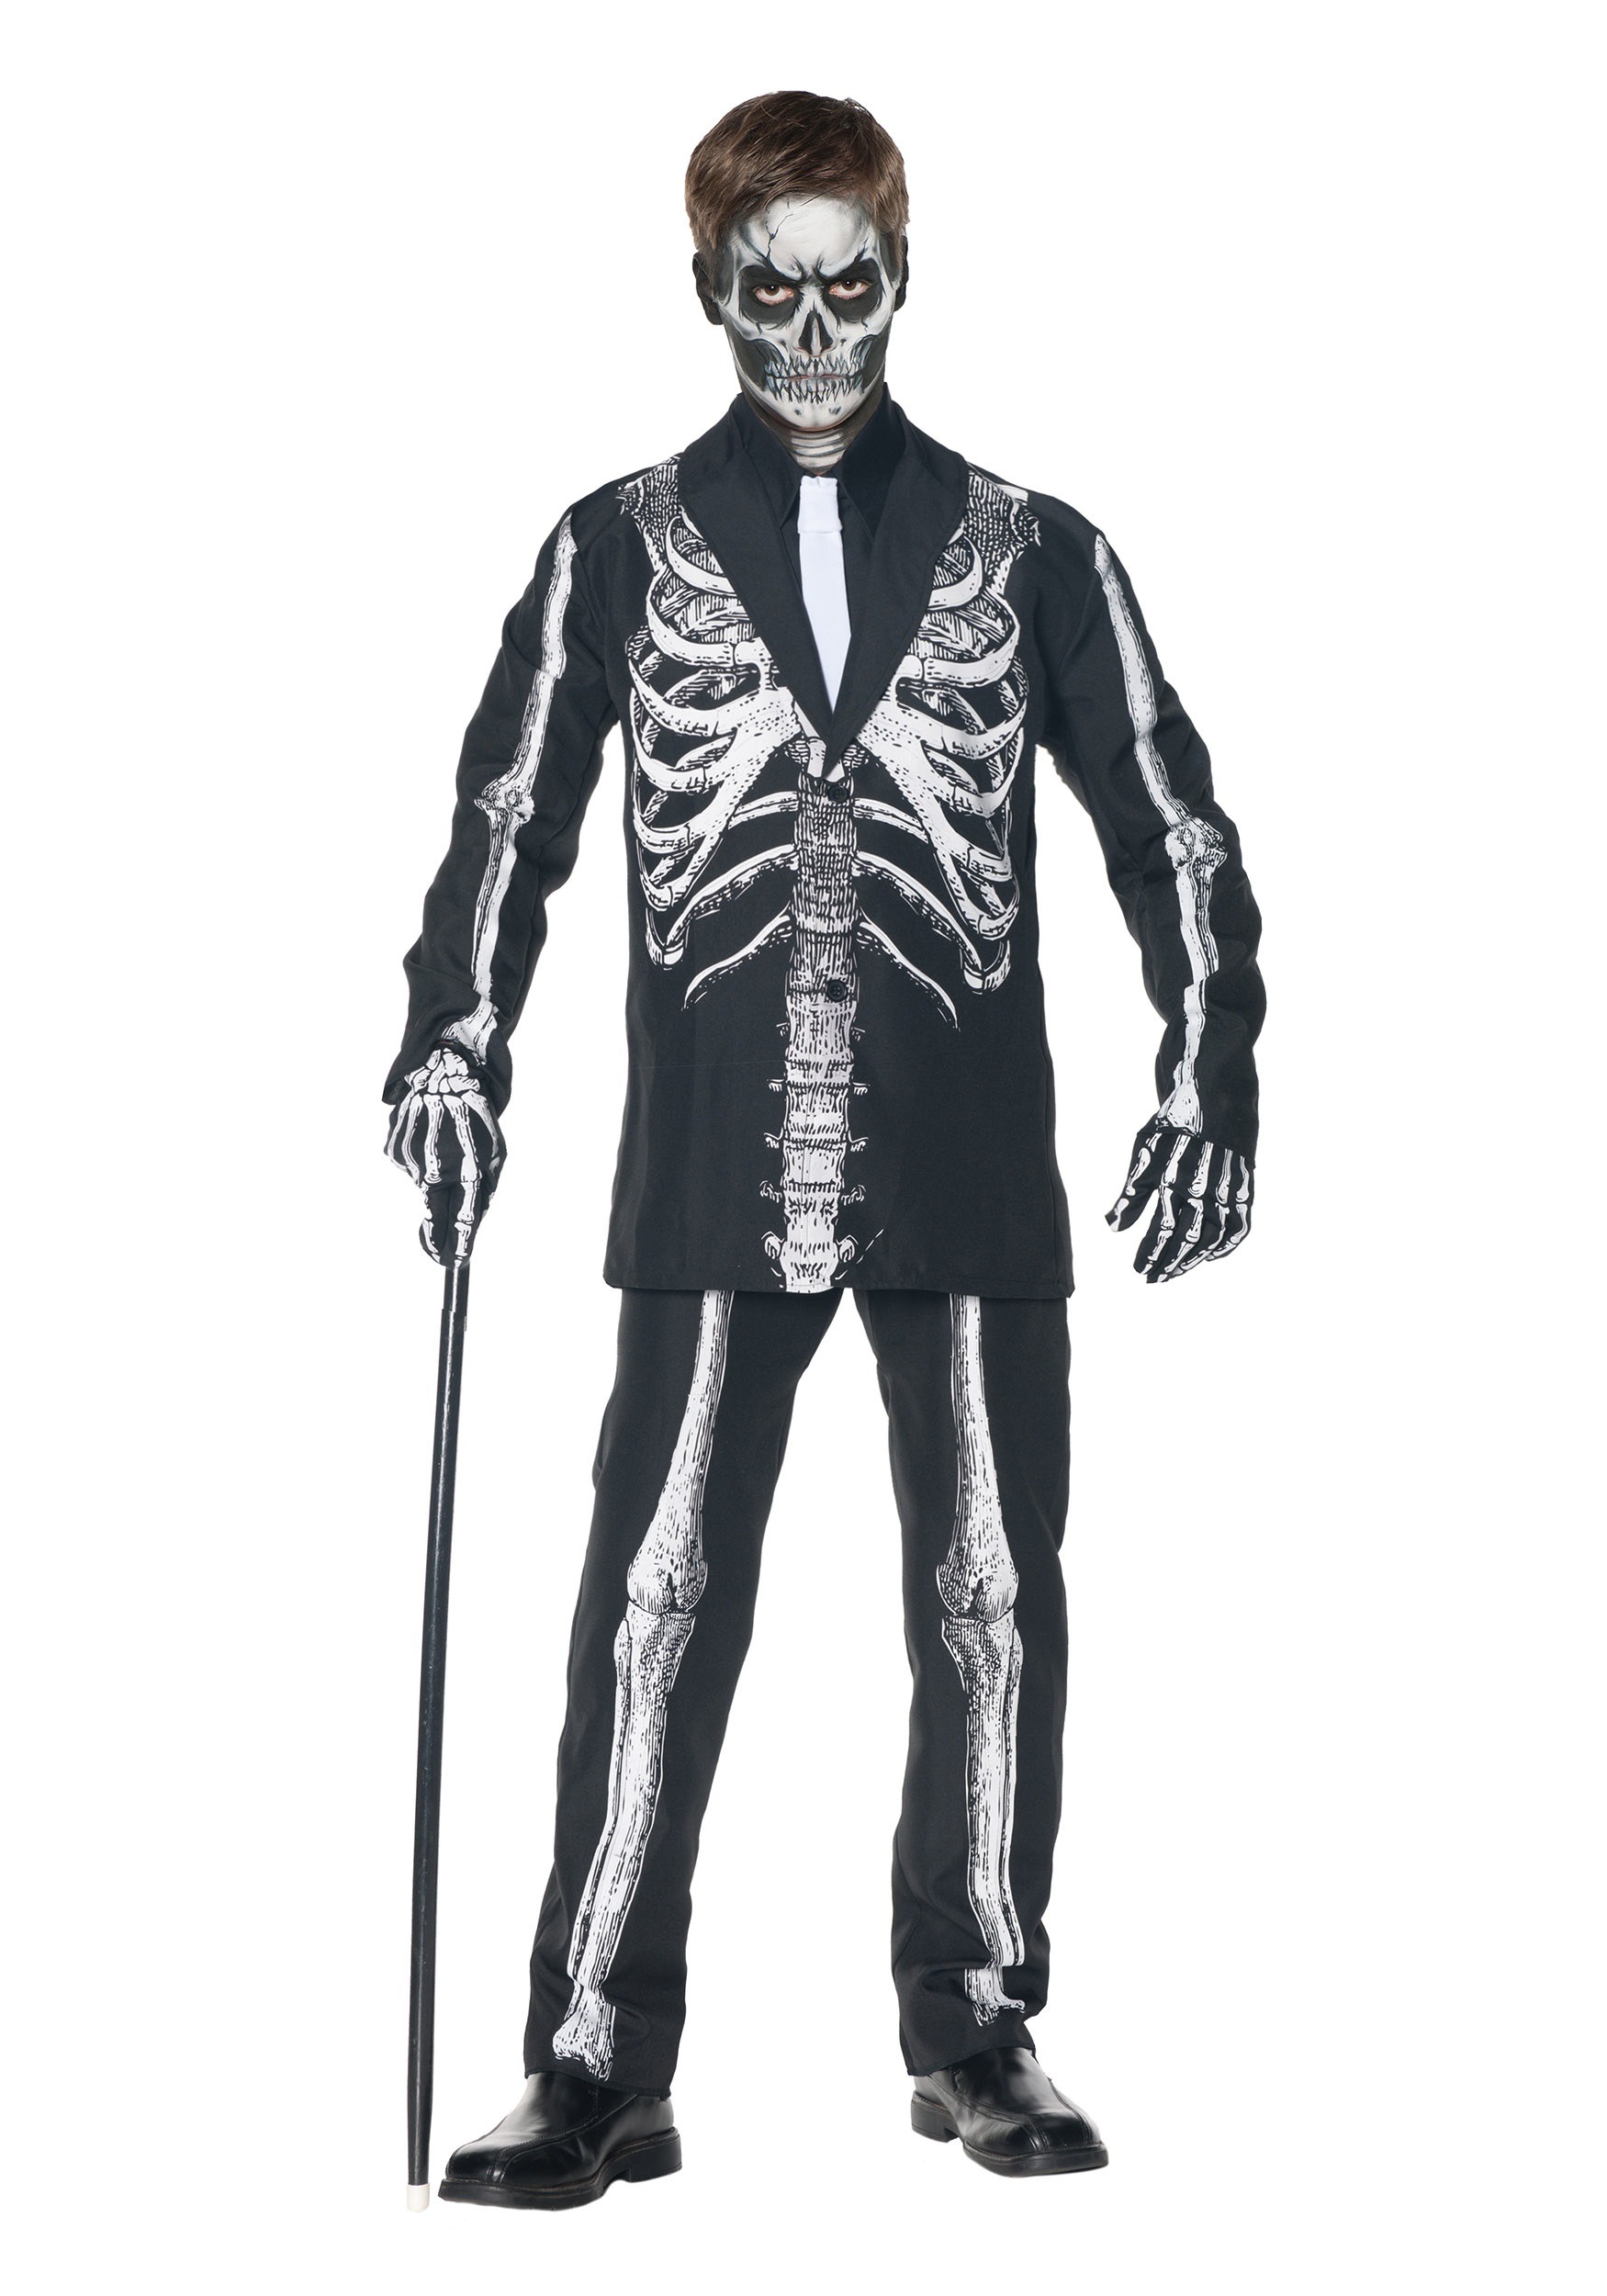 Boy’s Skeleton Suit Costume